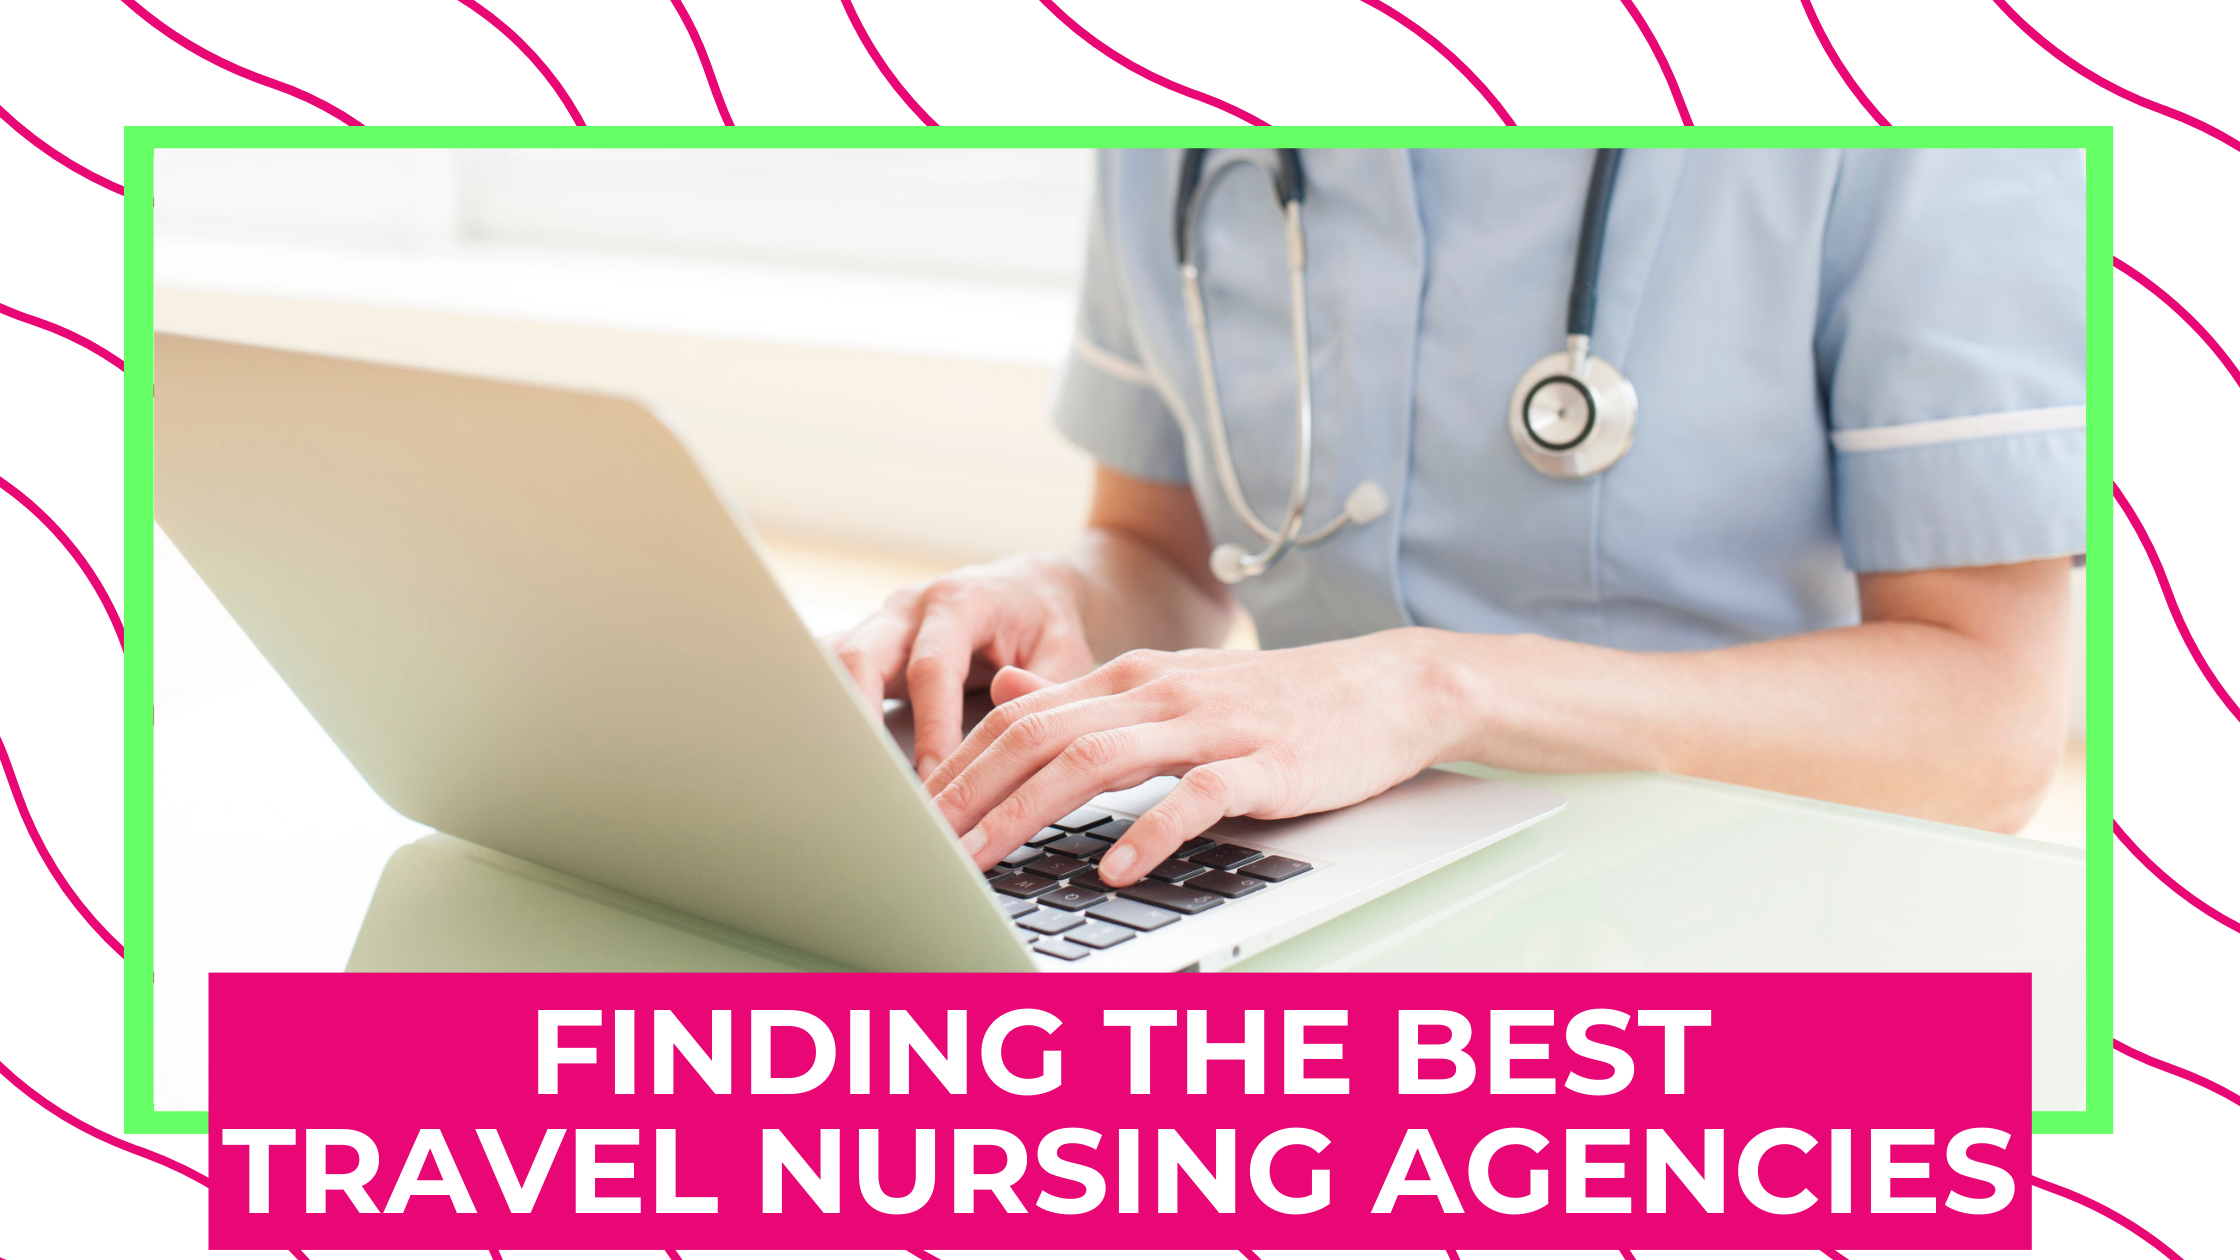 5 Tips for Finding the Best Travel Nursing Agencies nujib